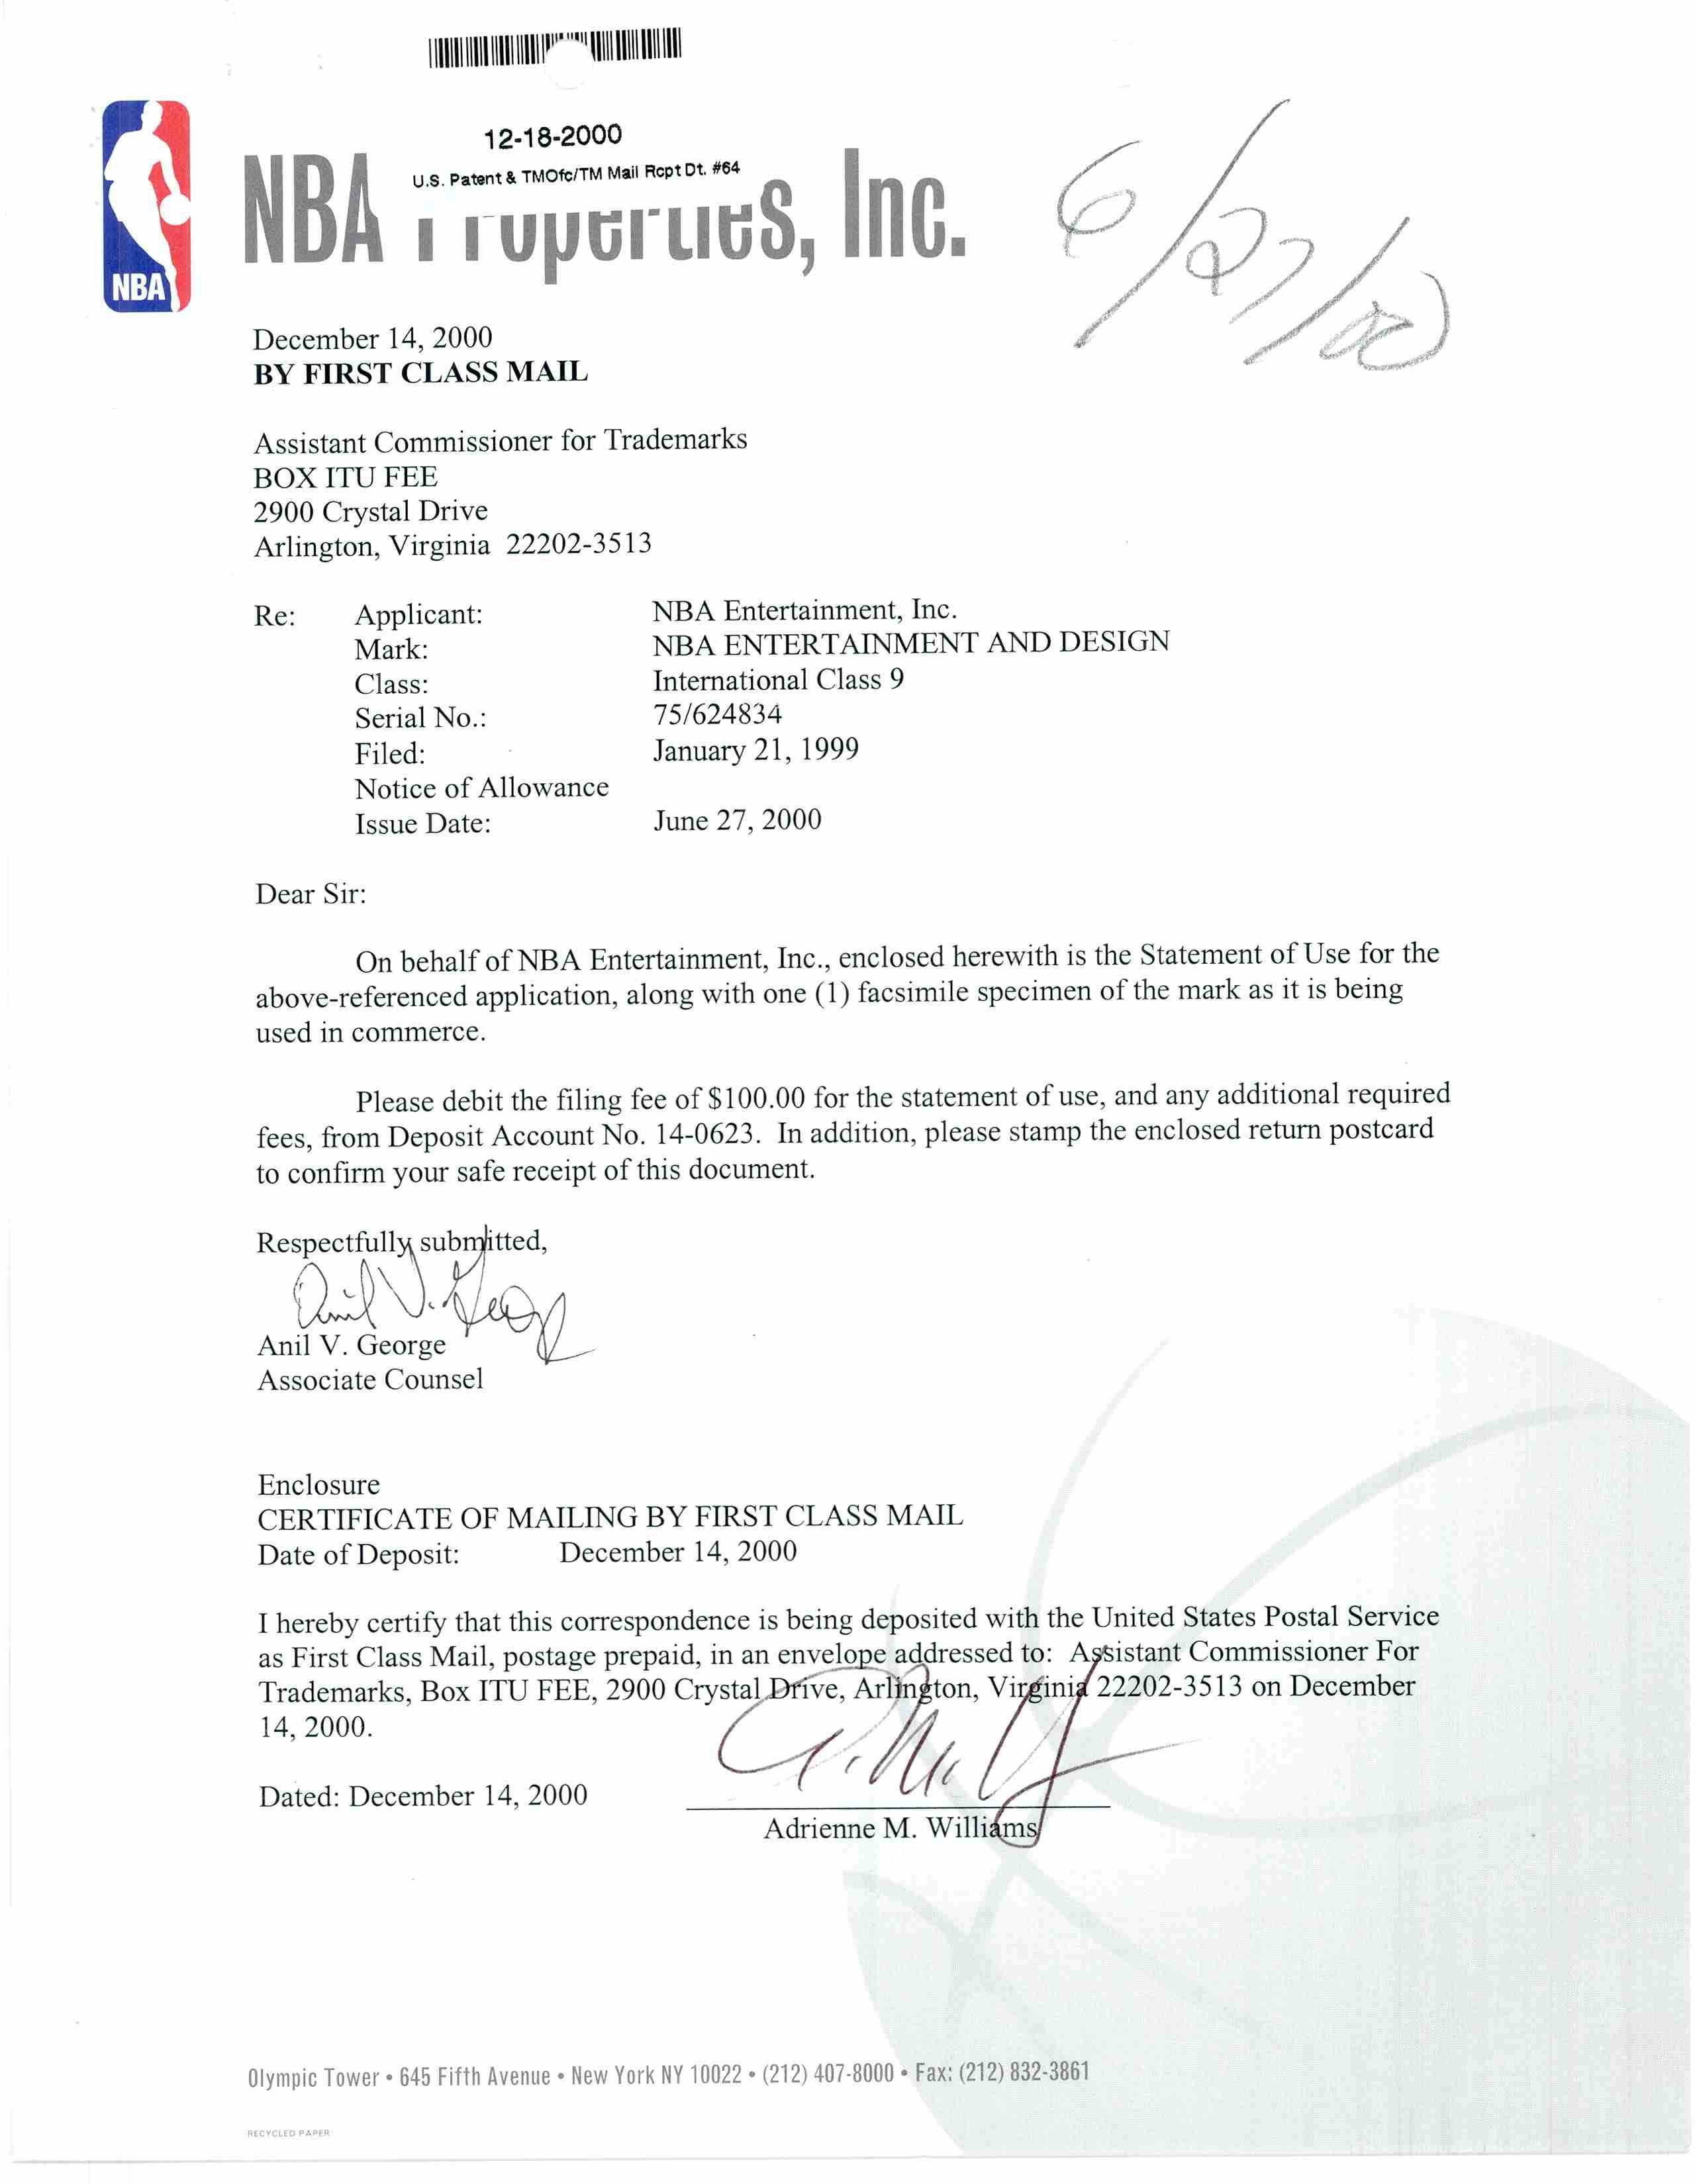 NEW JERSEY SWAMP DRAGONS - NBA Properties, Inc. Trademark Registration